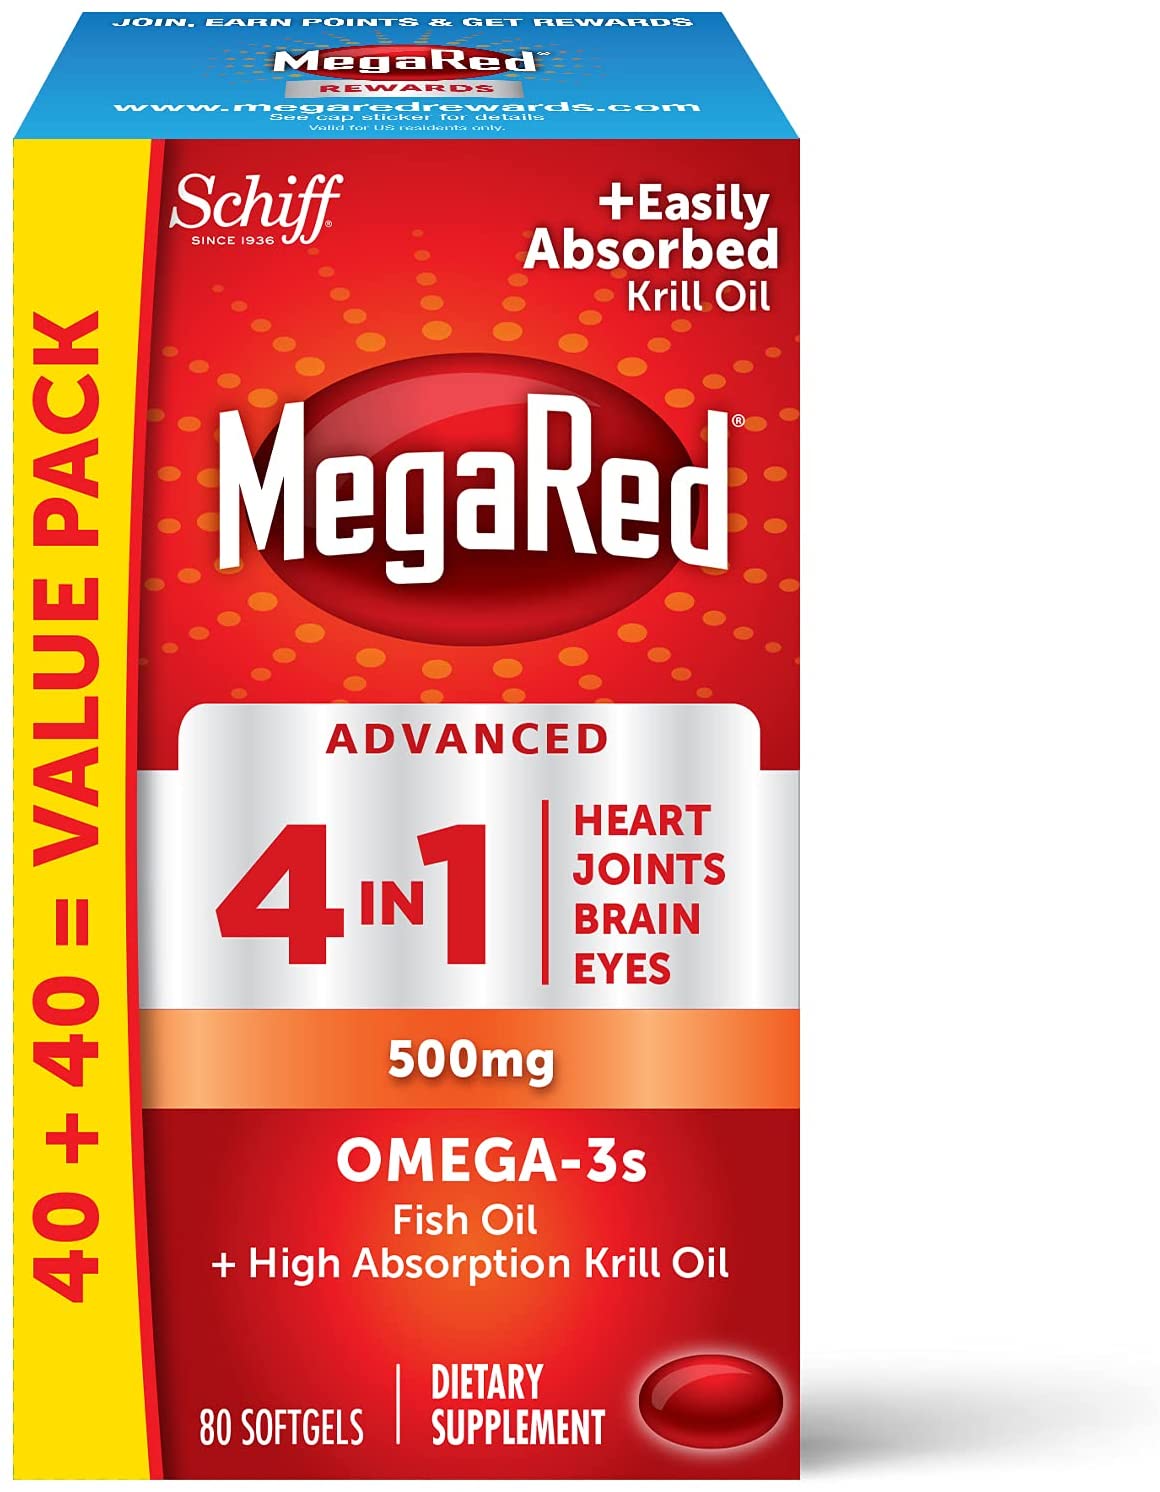 Megared Advanced 4-in-1 500mg Omega 3s, 80 Softgels